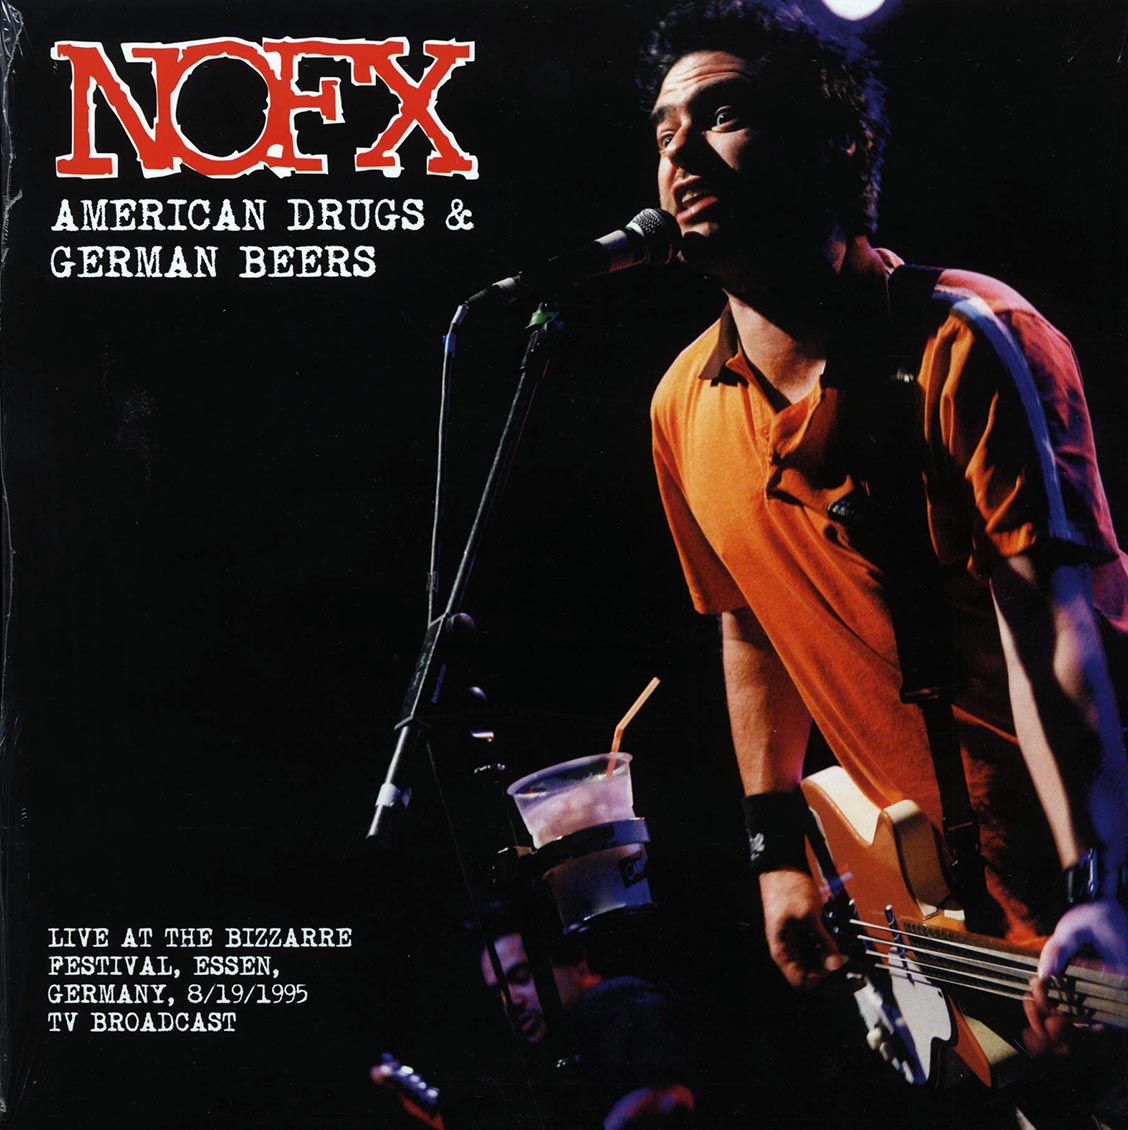 NOFX - American Drugs & German Beers: Live At The Bizzarre Festival, Essen, Germany, 8/19/1995 TV Broadcast - Vinyl LP